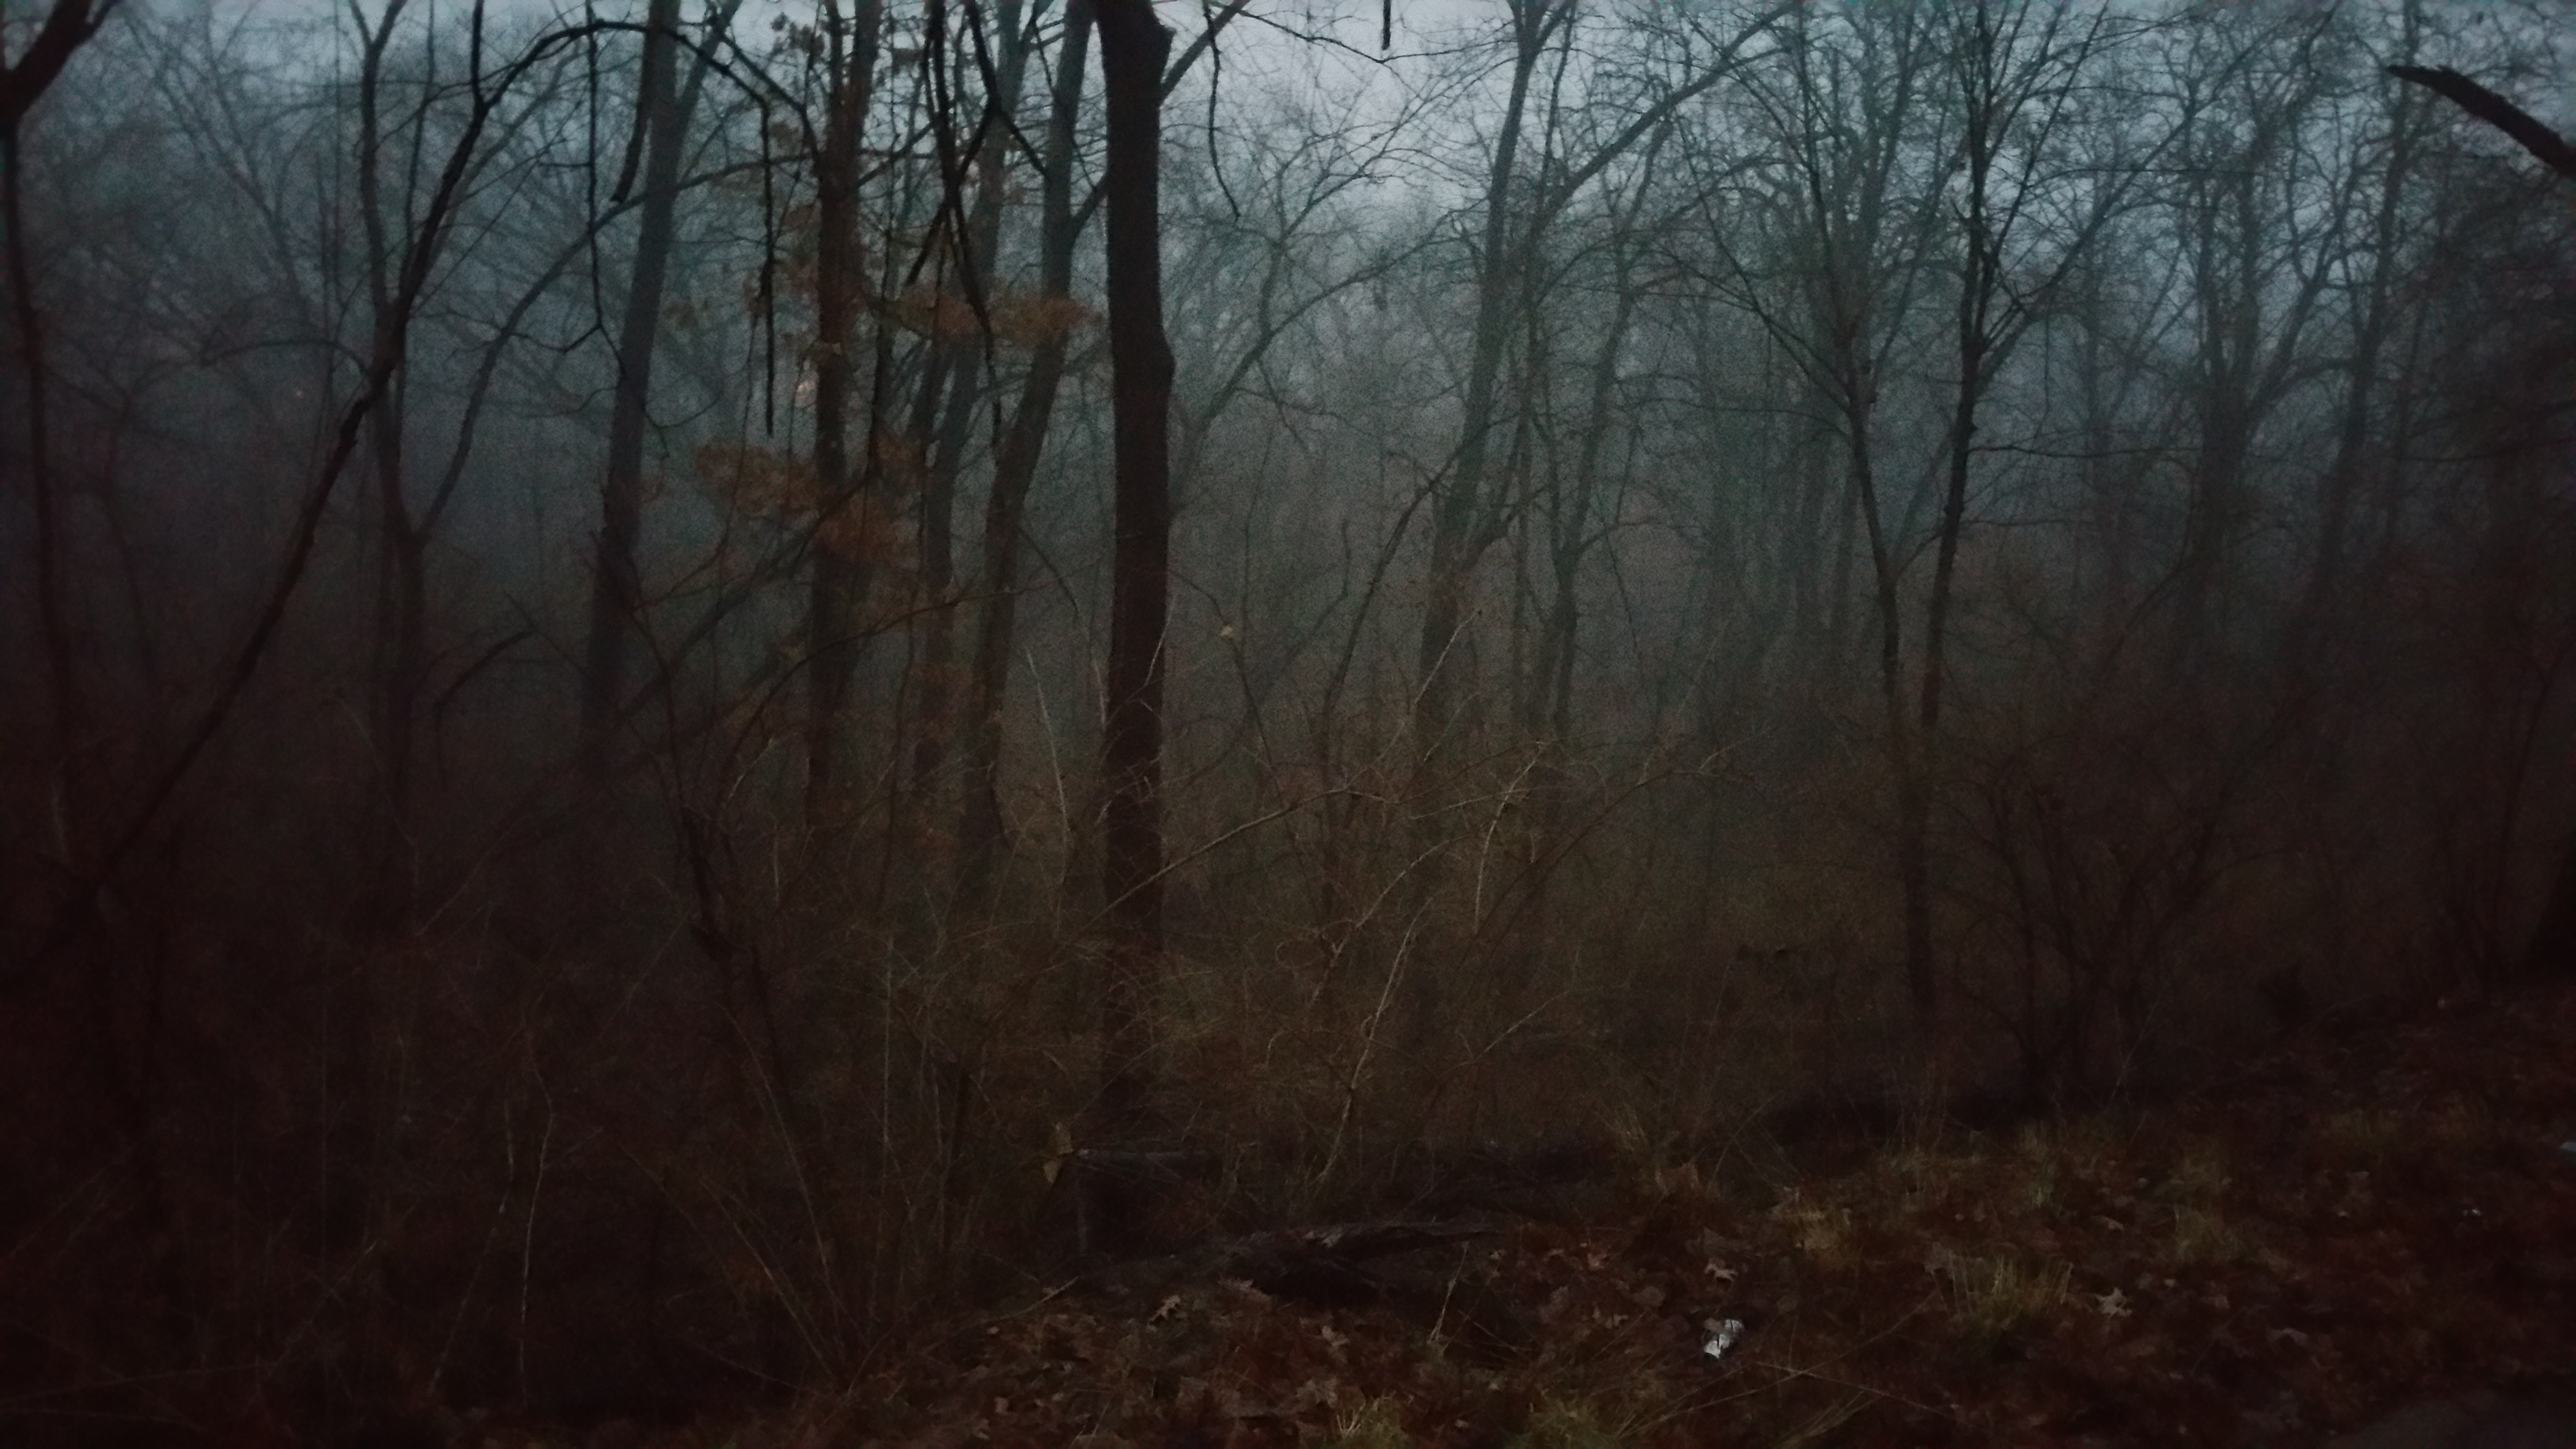 Creepy woods on the edge of town - Album on Imgur